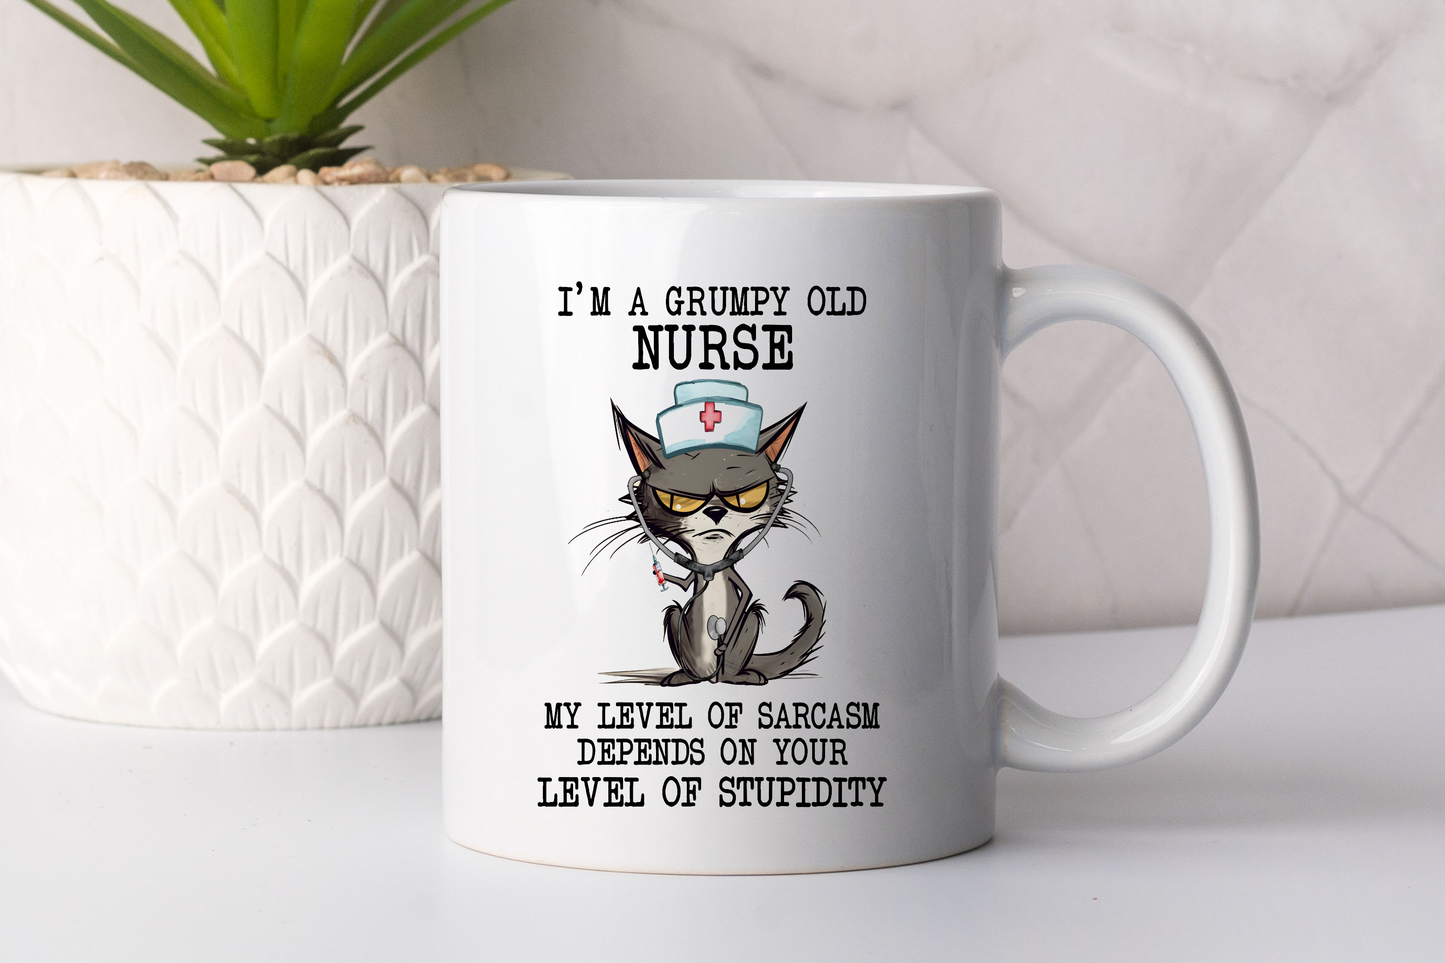 Mug - I'm a grumpy old nurse